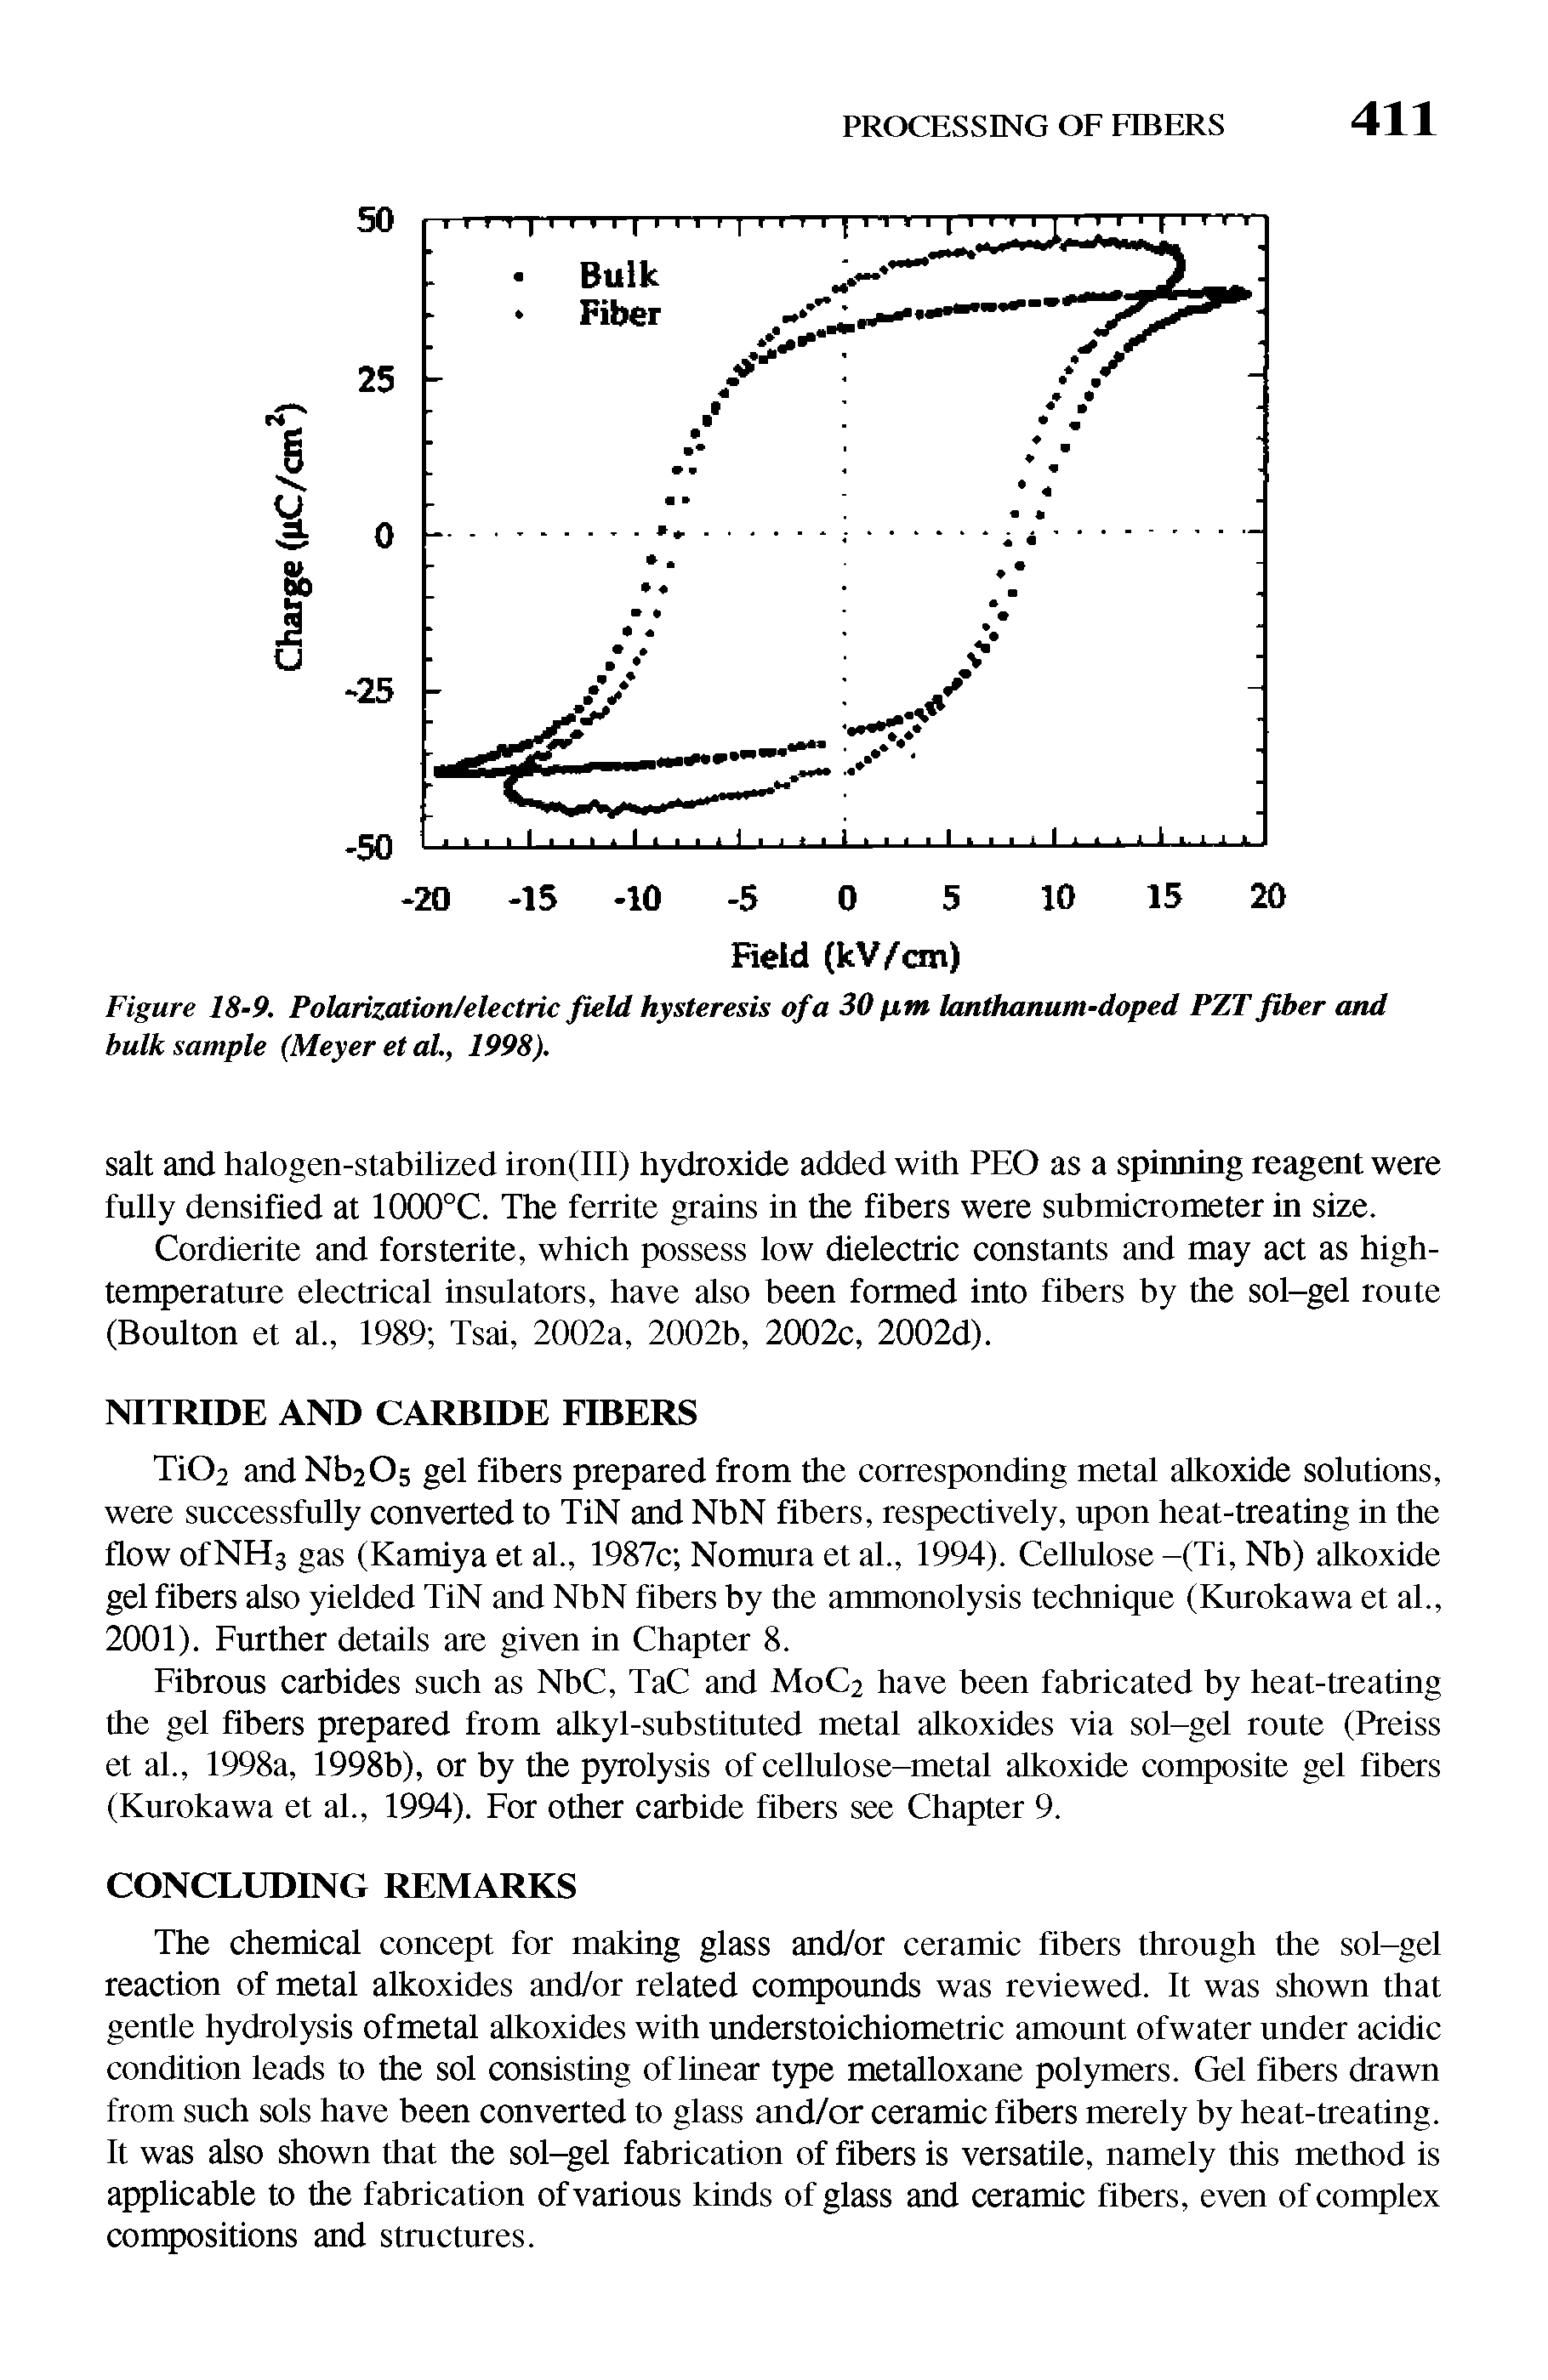 Figure 18-9. Polarization/electric field hysteresis of a 30 fstn lanthanum-doped PZT fiber and bulk sample (Meyer etal., 1998).